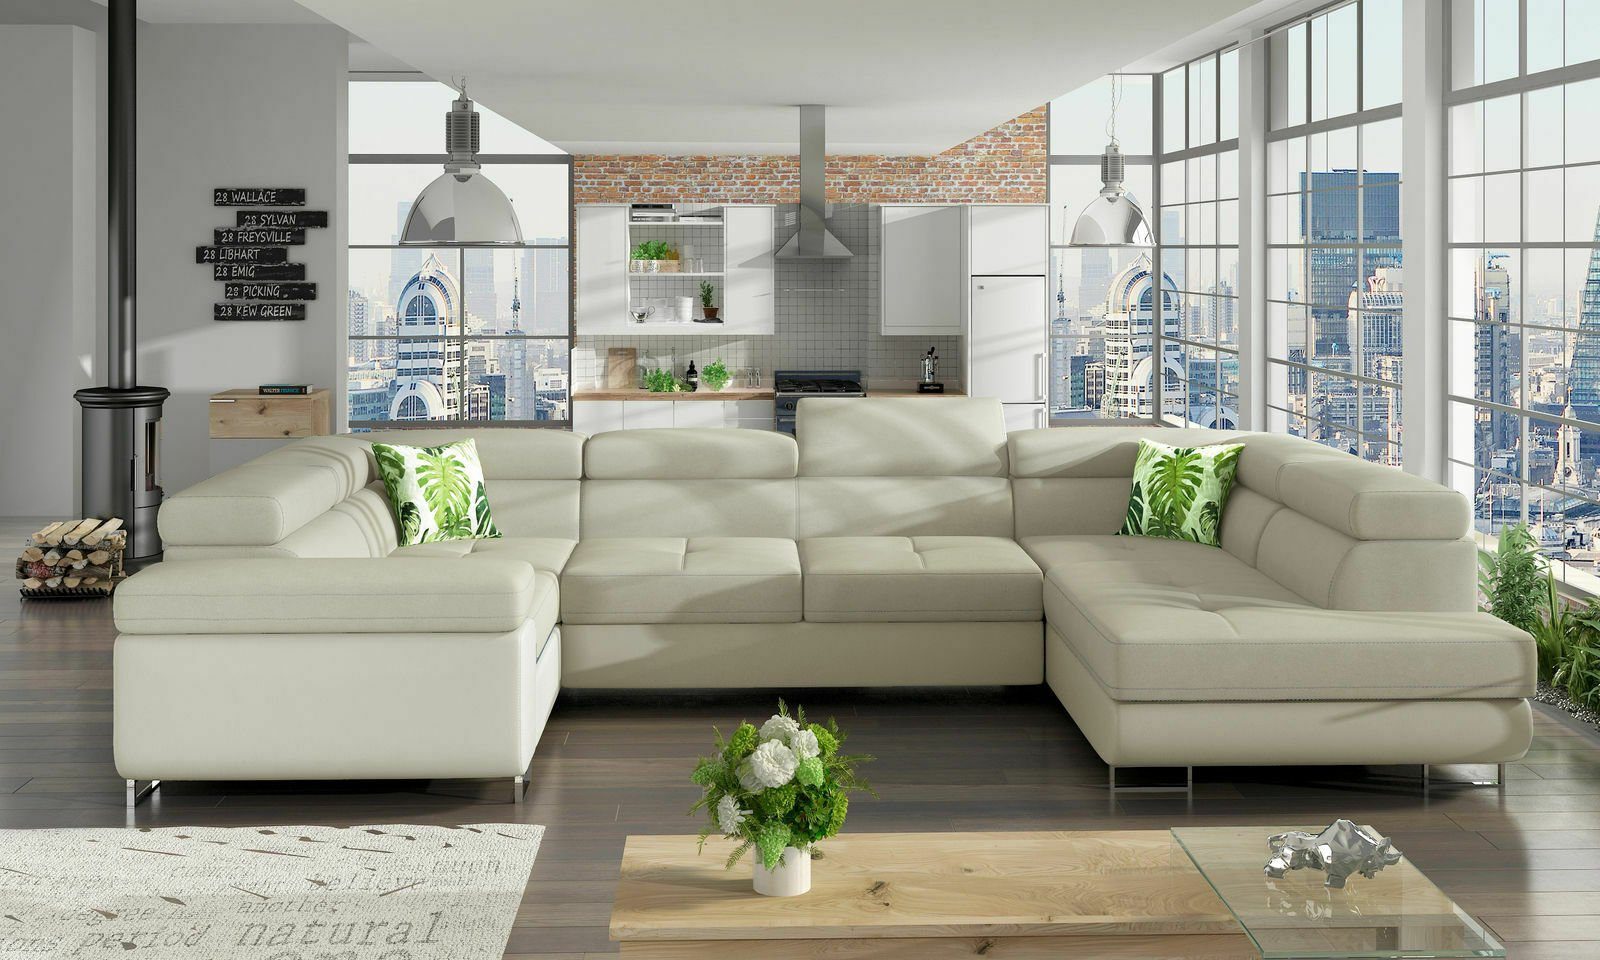 JVmoebel Ecksofa Design Ecksofa Schlafsofa Bettfunktion Couch Leder Polster Textil, Mit Bettfunktion Weiß/Beige